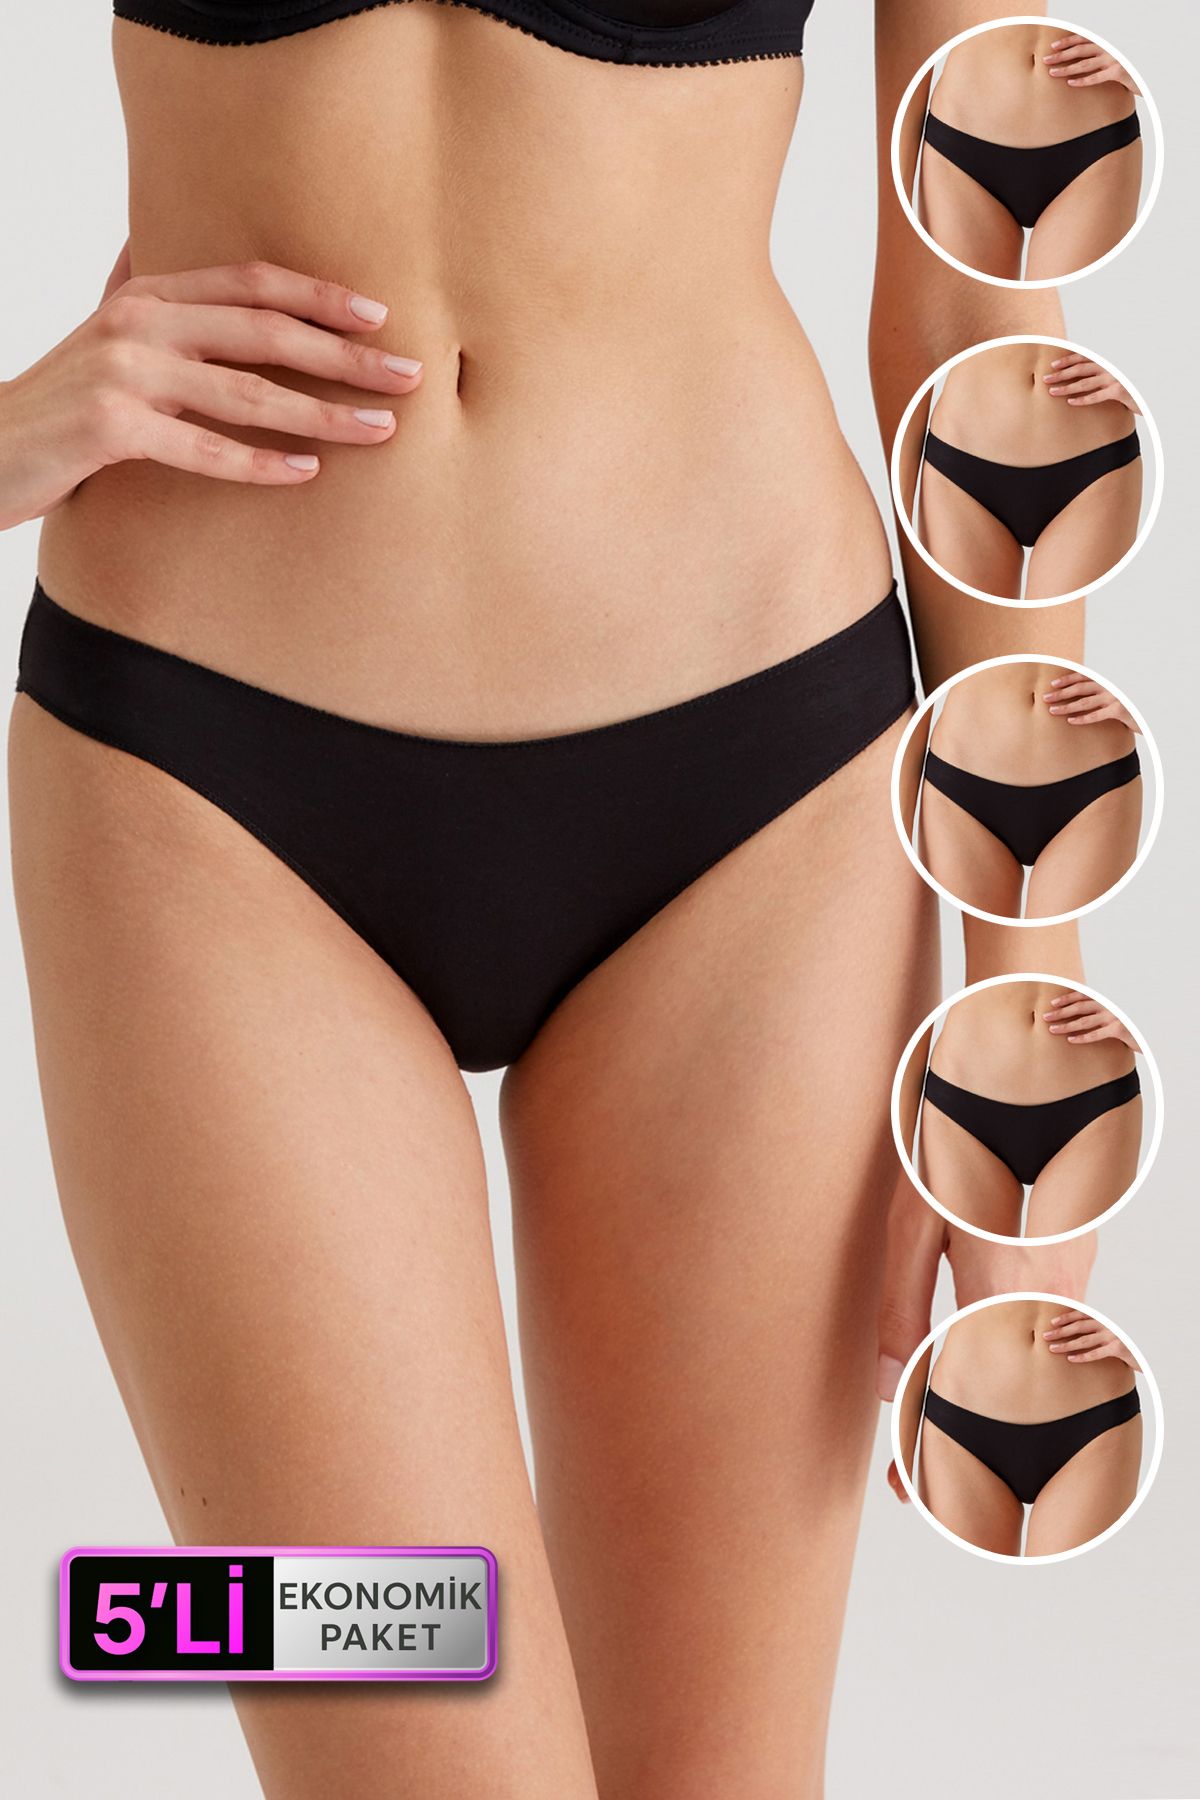 Pierre Cardin Kadın 5'li Ekonomik Paket Siyah 2050 No Show Pamuklu Bikini Slip